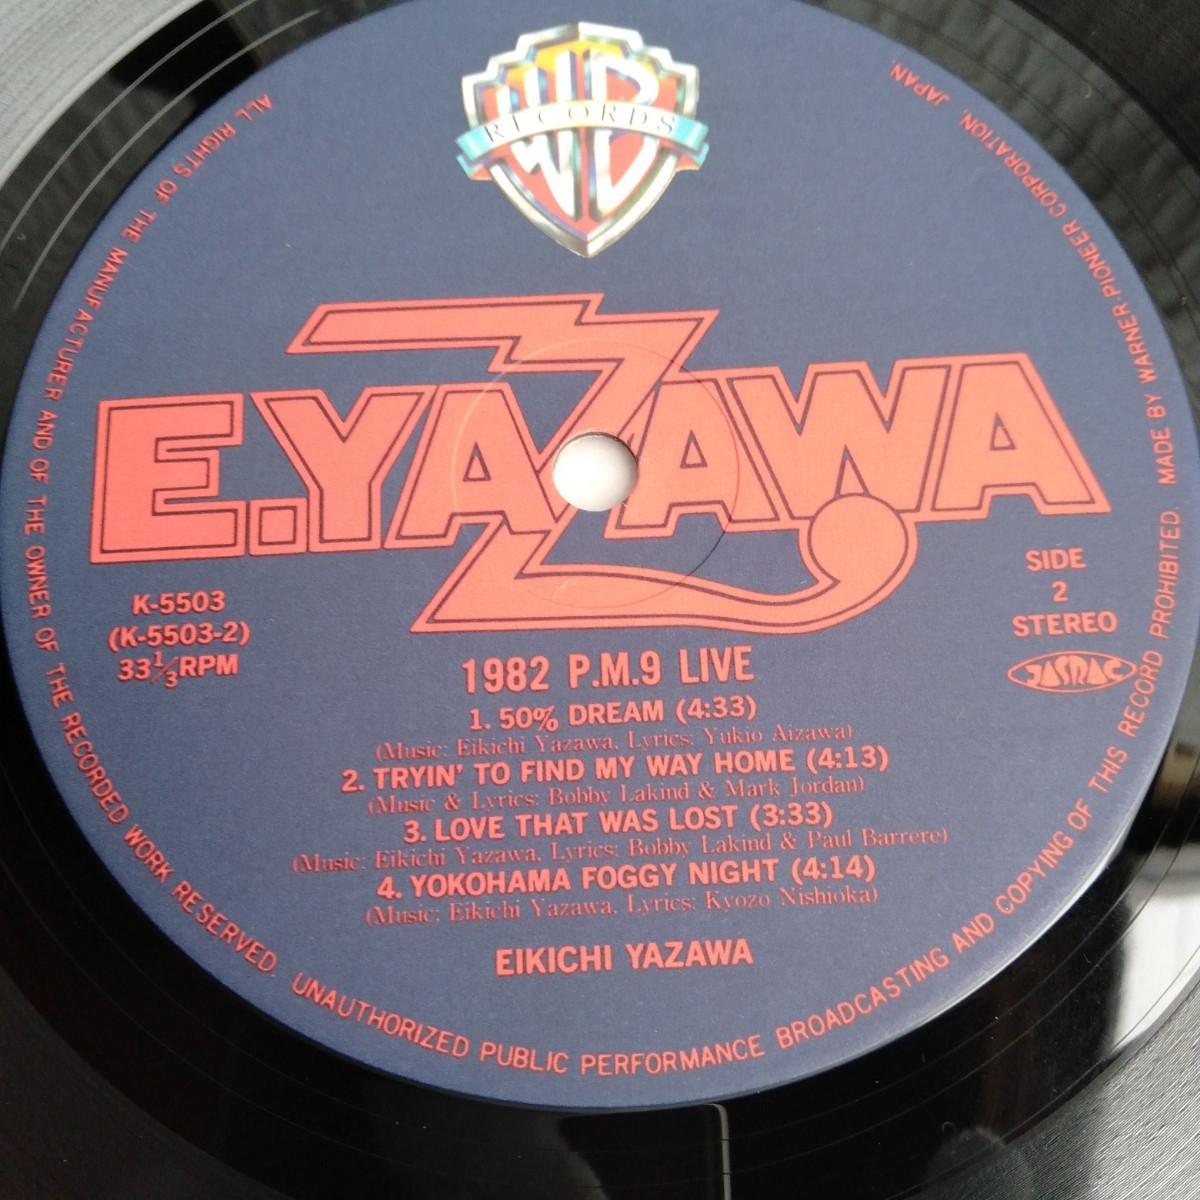 ya255 1982 P.M.9 LIVE/EIKICHI YAZAWA Yazawa Eikichi запись LP EP какой листов тоже единая стоимость доставки 1,000 иен воспроизведение не проверка 